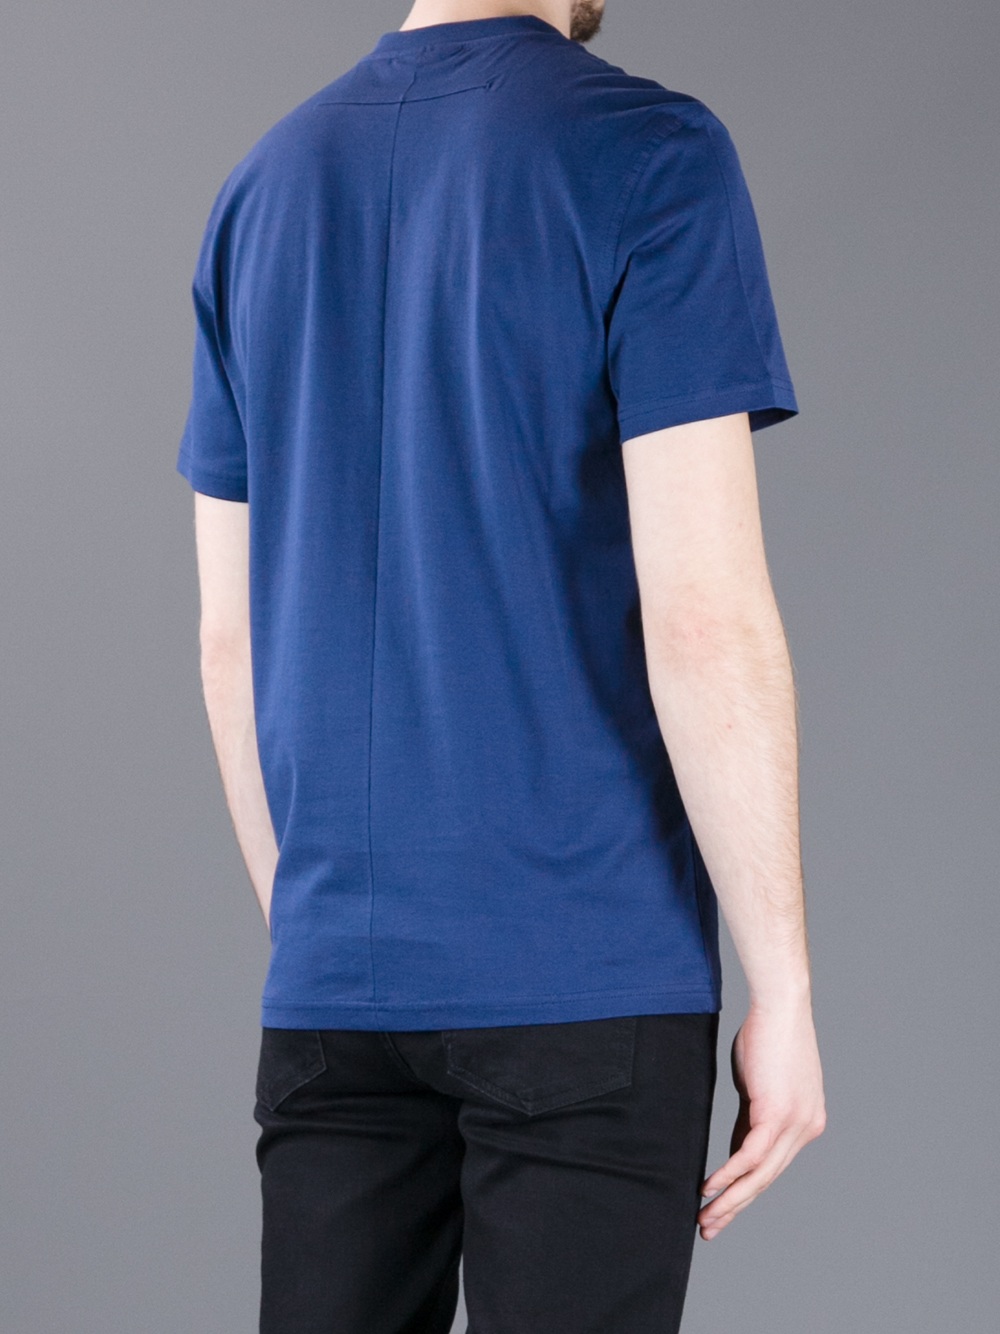 Lyst - Givenchy Logo Tshirt in Blue for Men